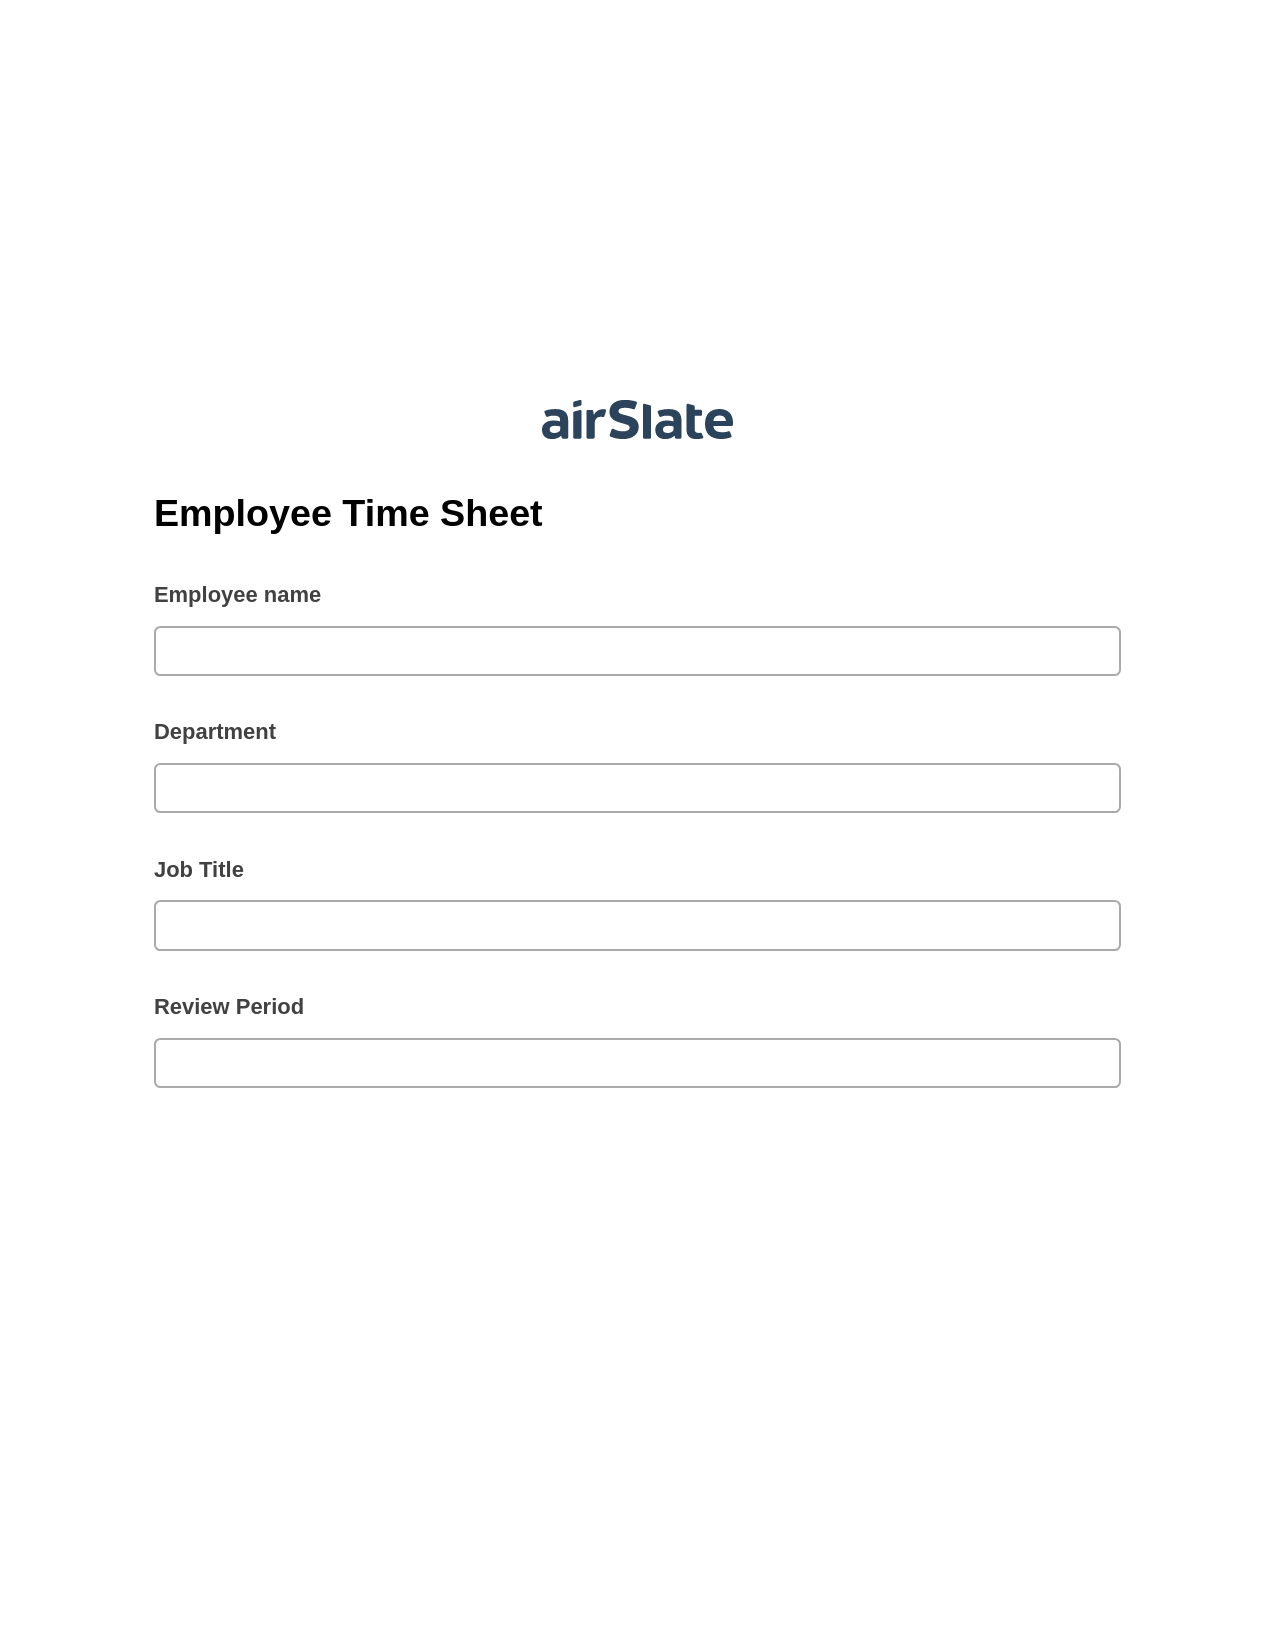 Multirole Employee Time Sheet Pre-fill Dropdowns from CSV file Bot, Create Salesforce Records Bot, Webhook Postfinish Bot